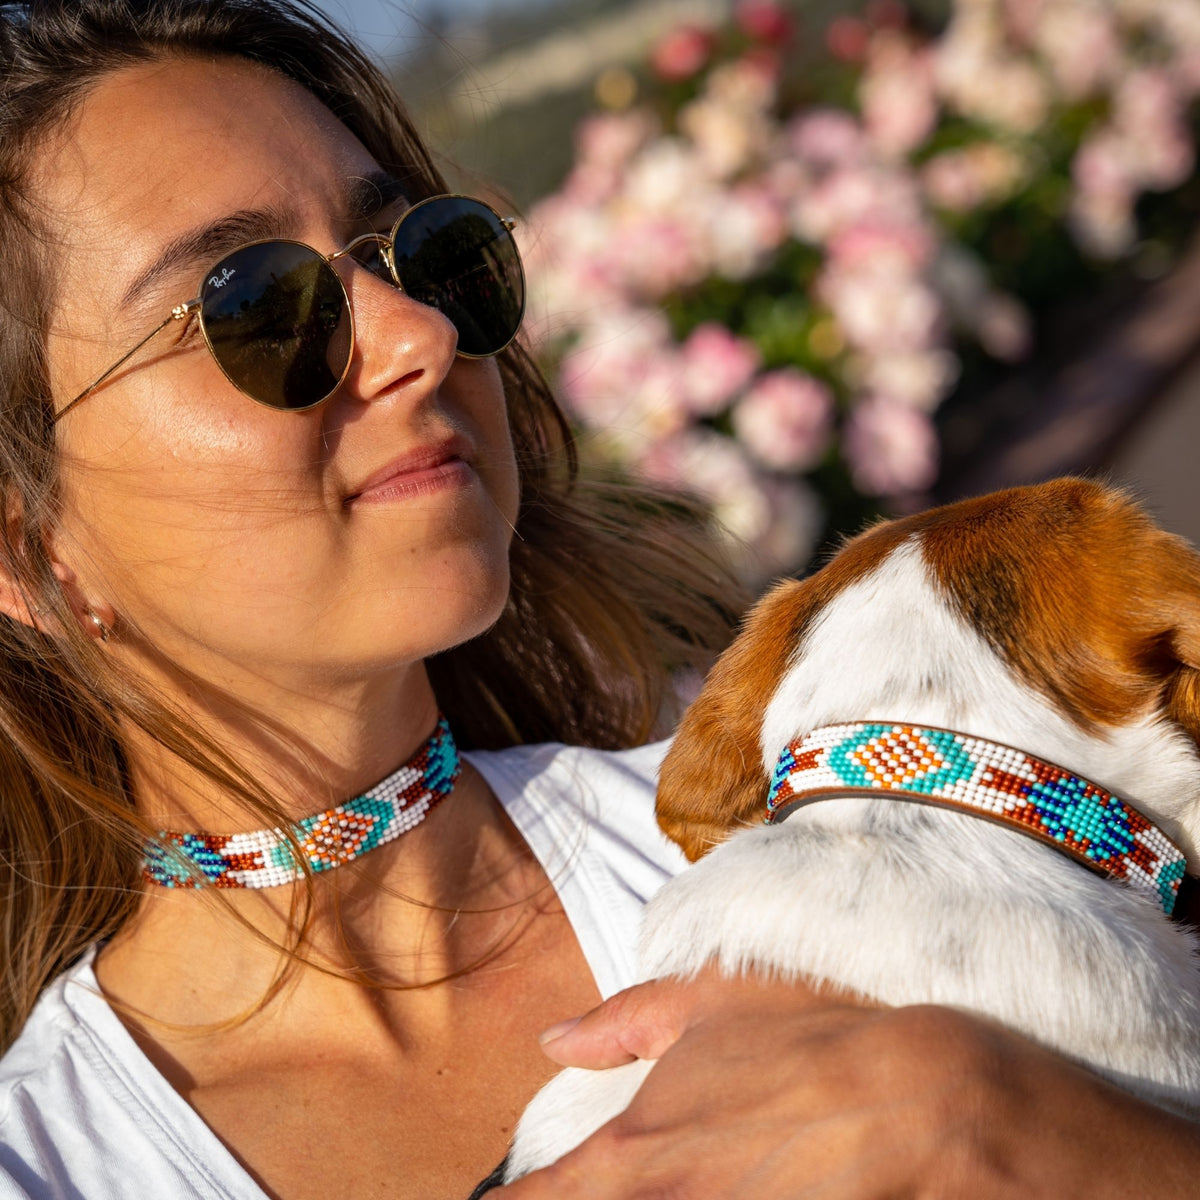 Matching choker/dog collar Aztec Bundle – Sambboho